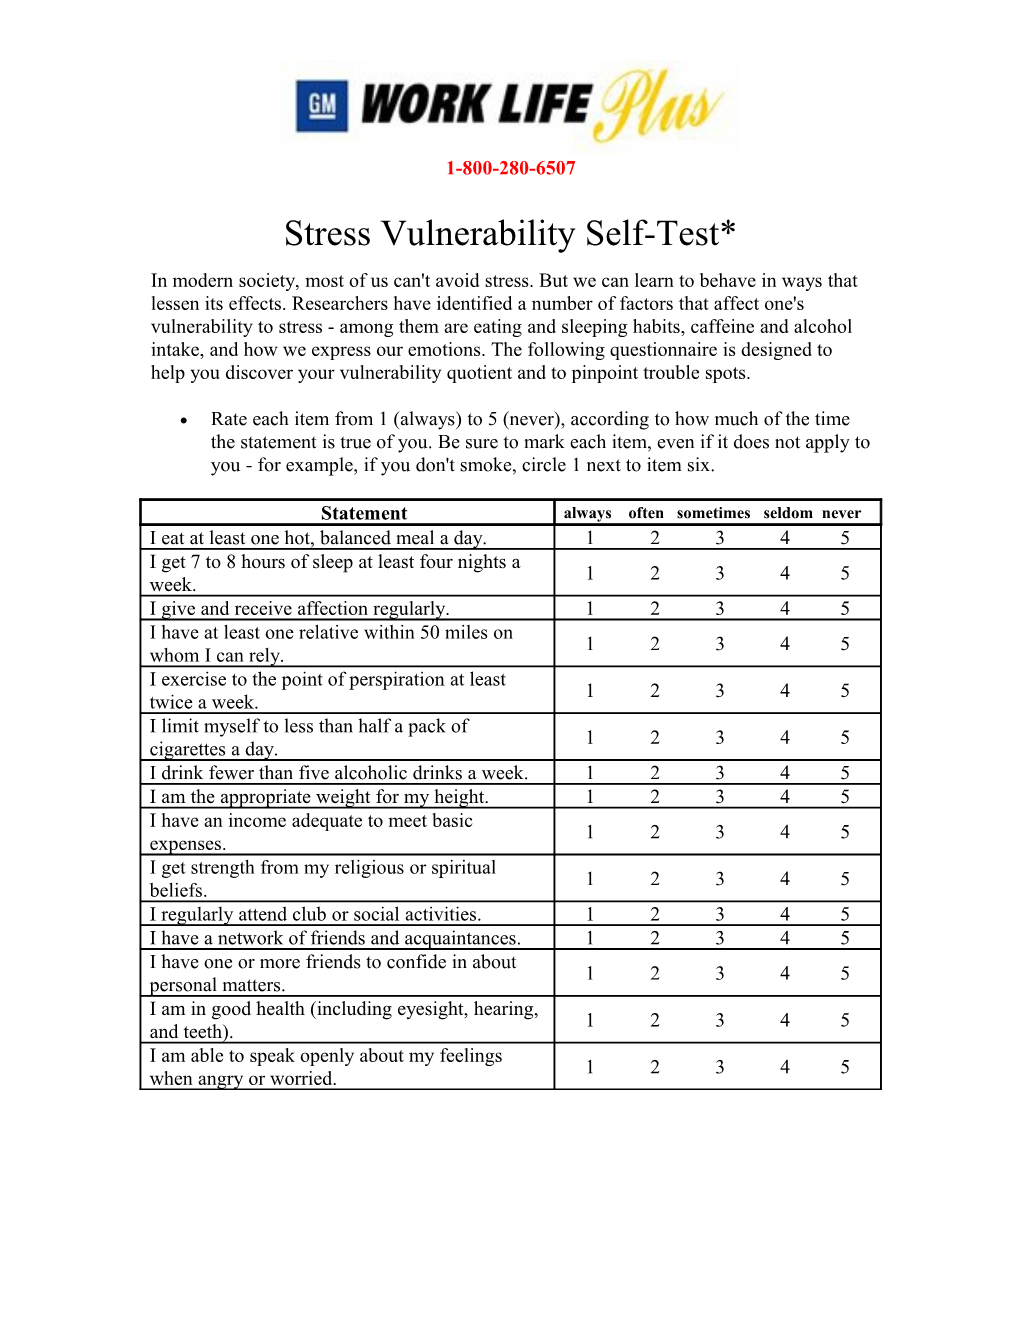 Stress Vulnerability Self-Test